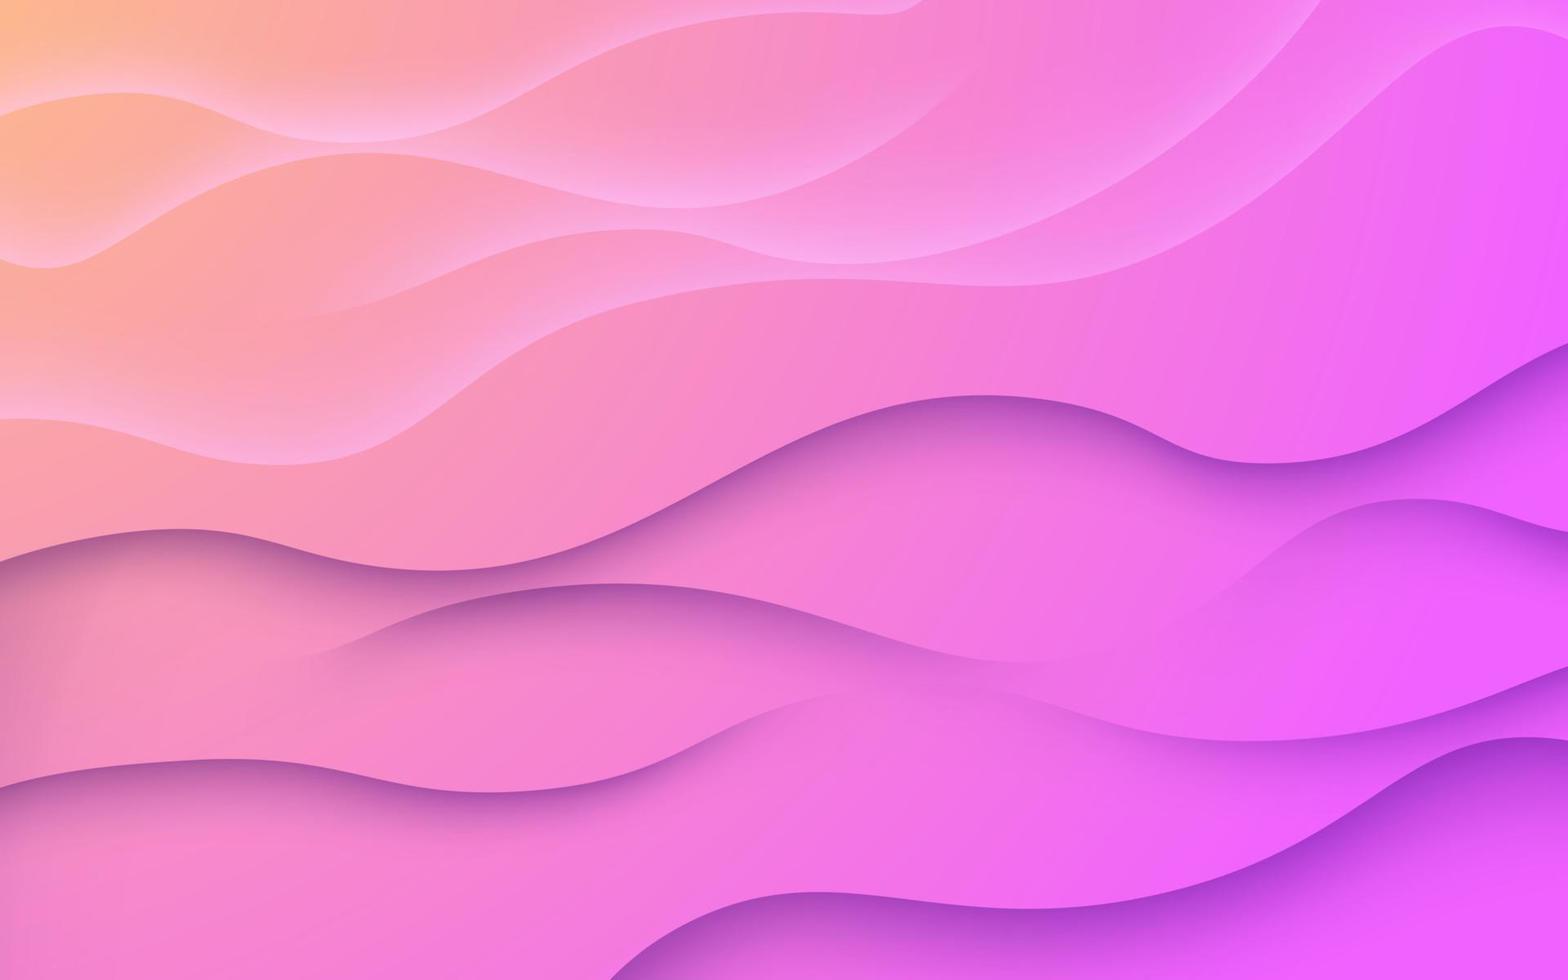 resumen dinámica rosado púrpura suave diagonal forma ligero y sombra ondulado antecedentes. eps10 vector